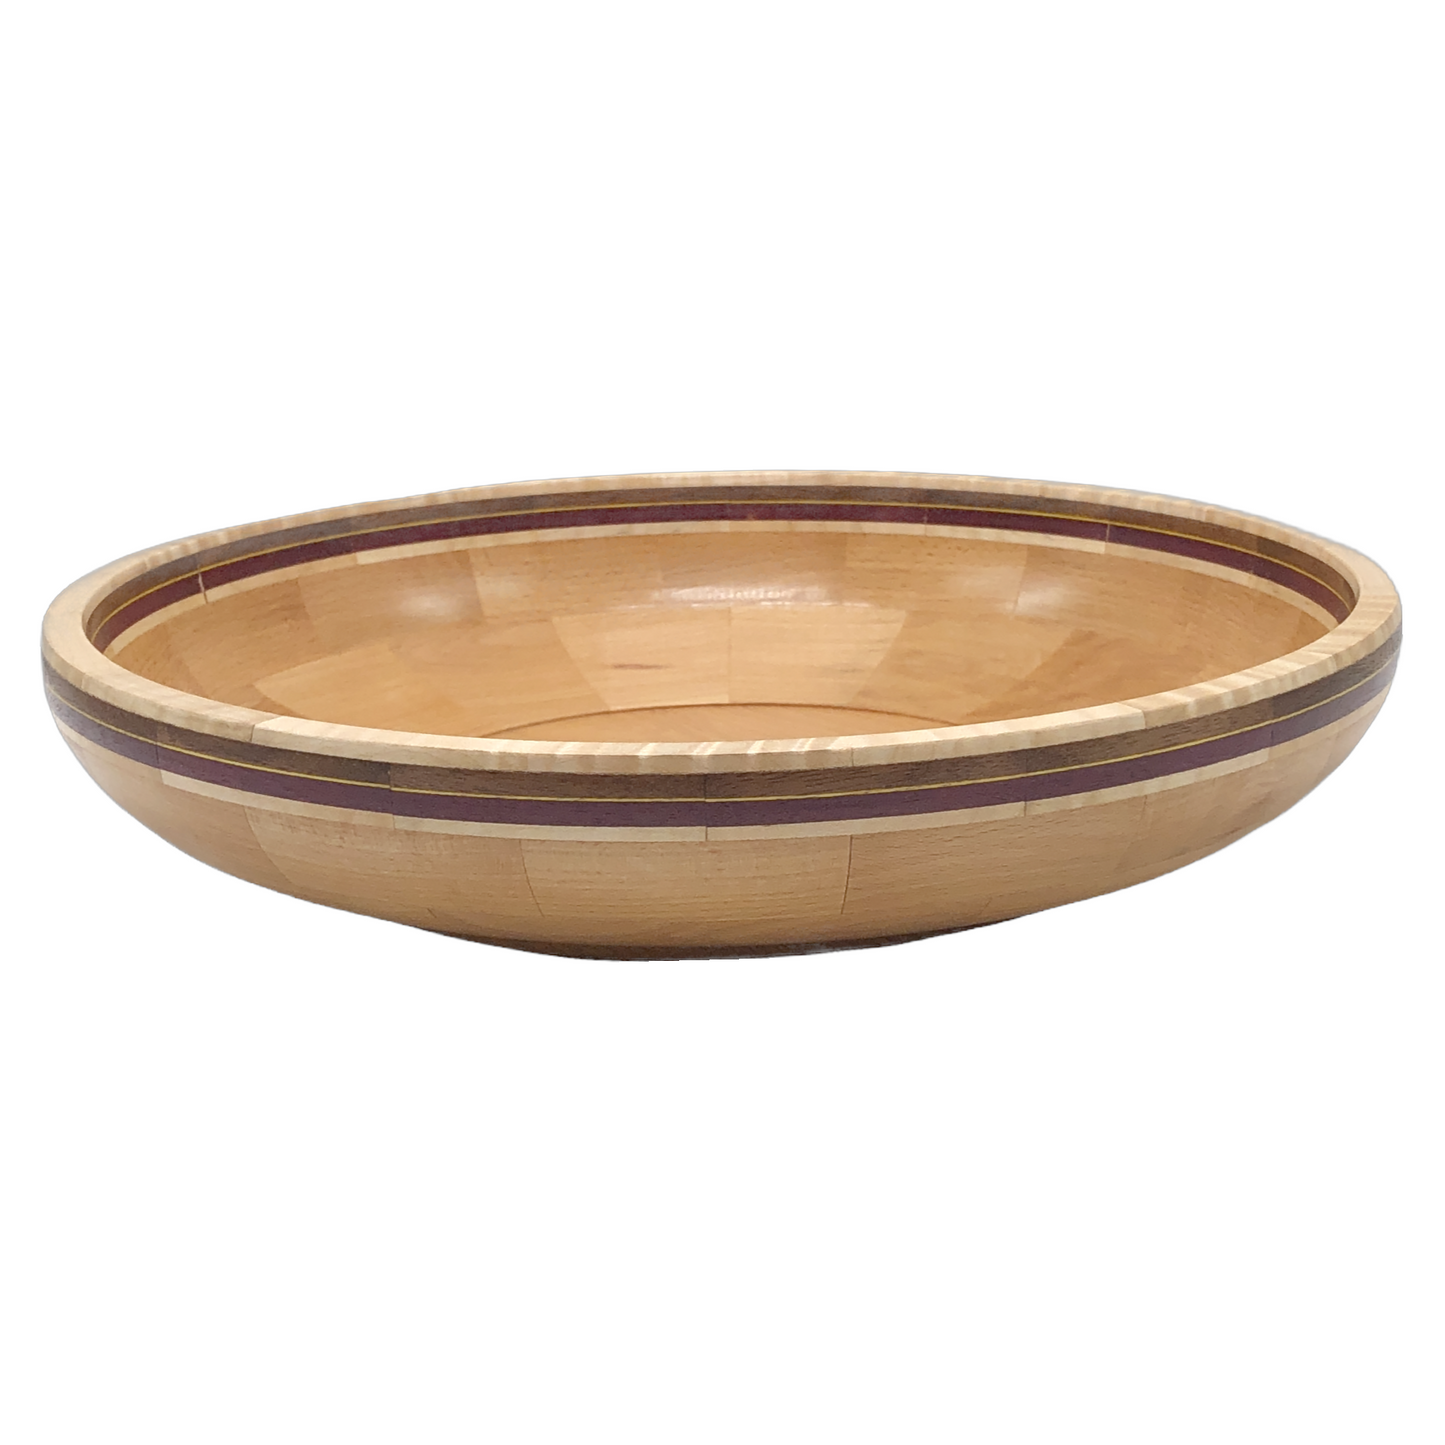 Beech wood segmented wooden bowl artisan wood turnings, made in Michigan with Michigan woods, Hanni Gallery, Harbor Springs, Michigan